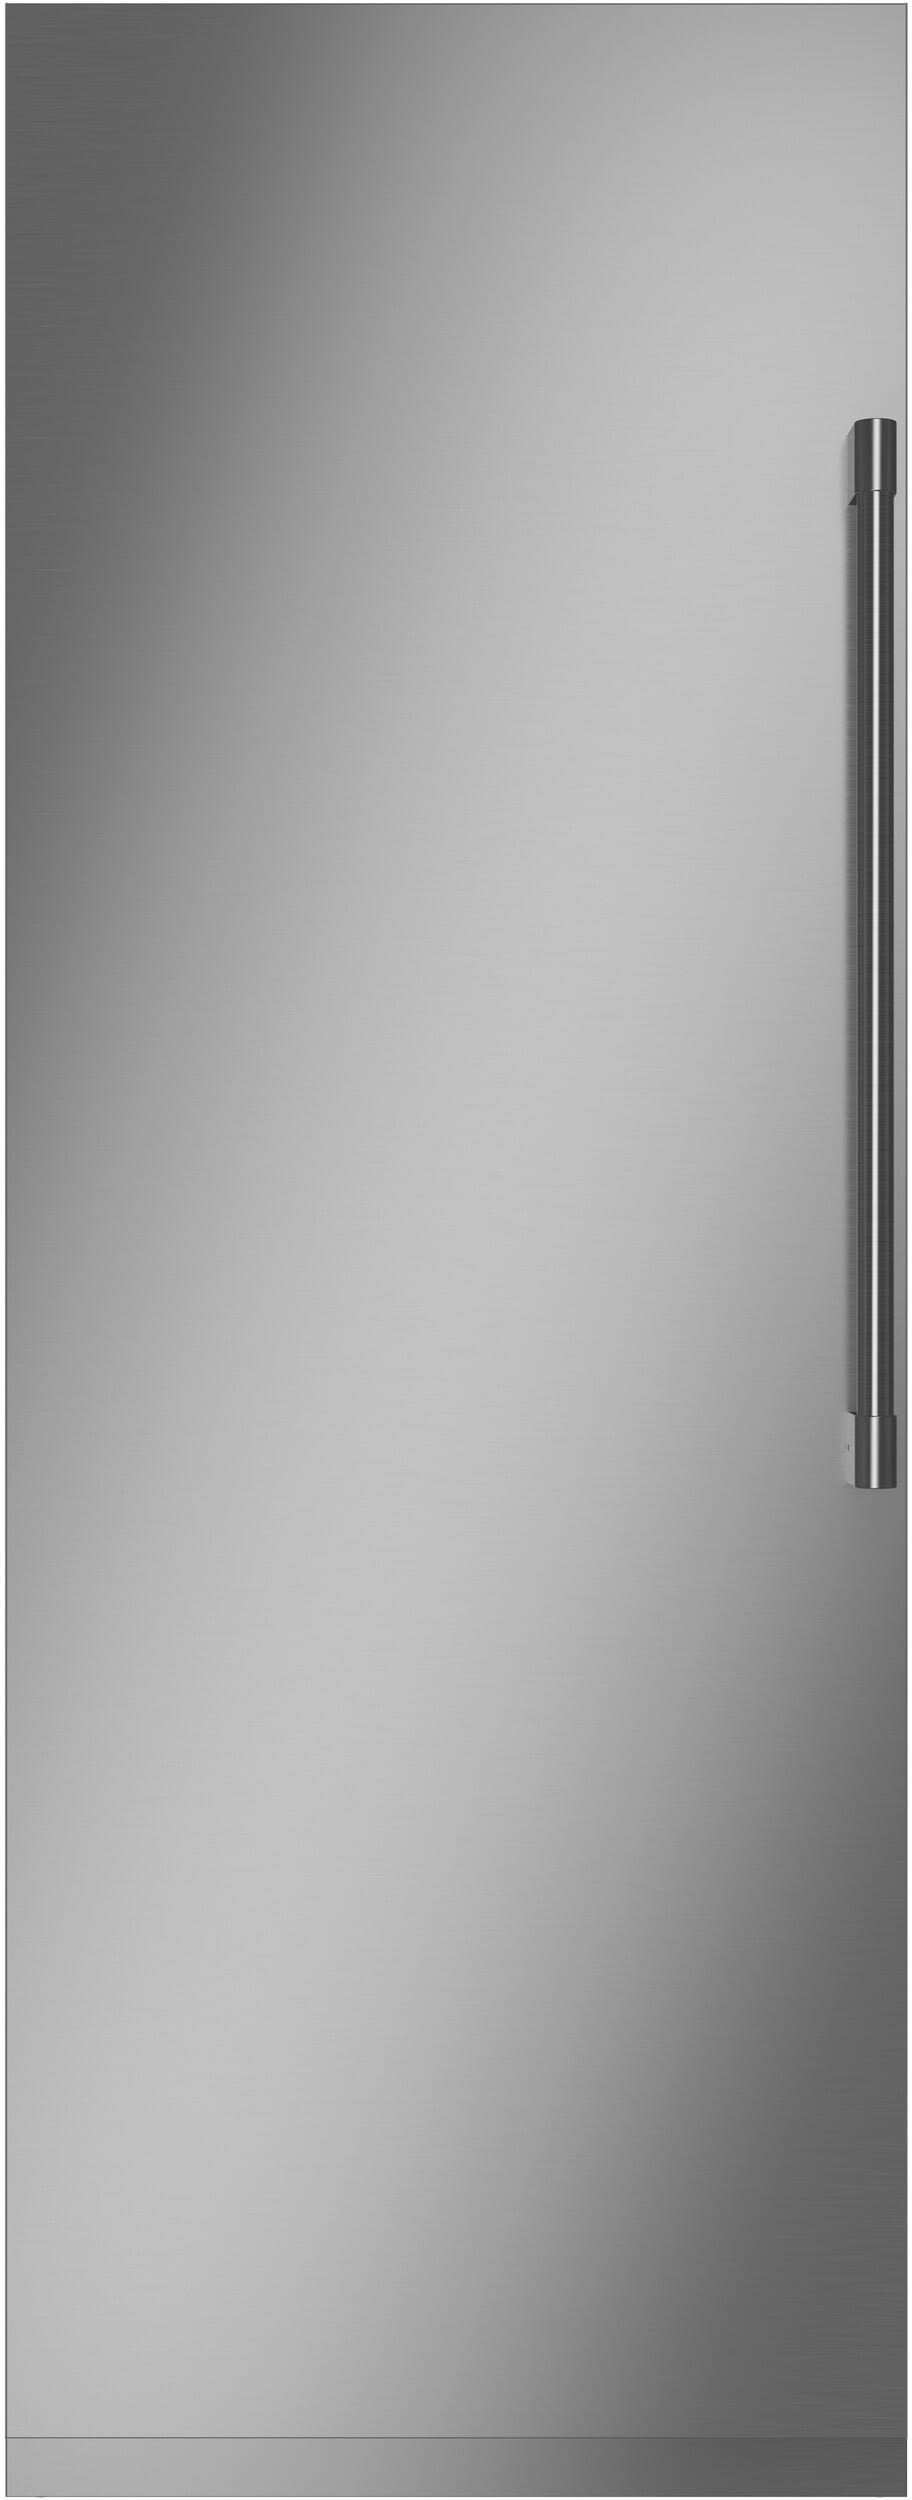 30 Inch Panel Ready Premium Column Smart Freezer